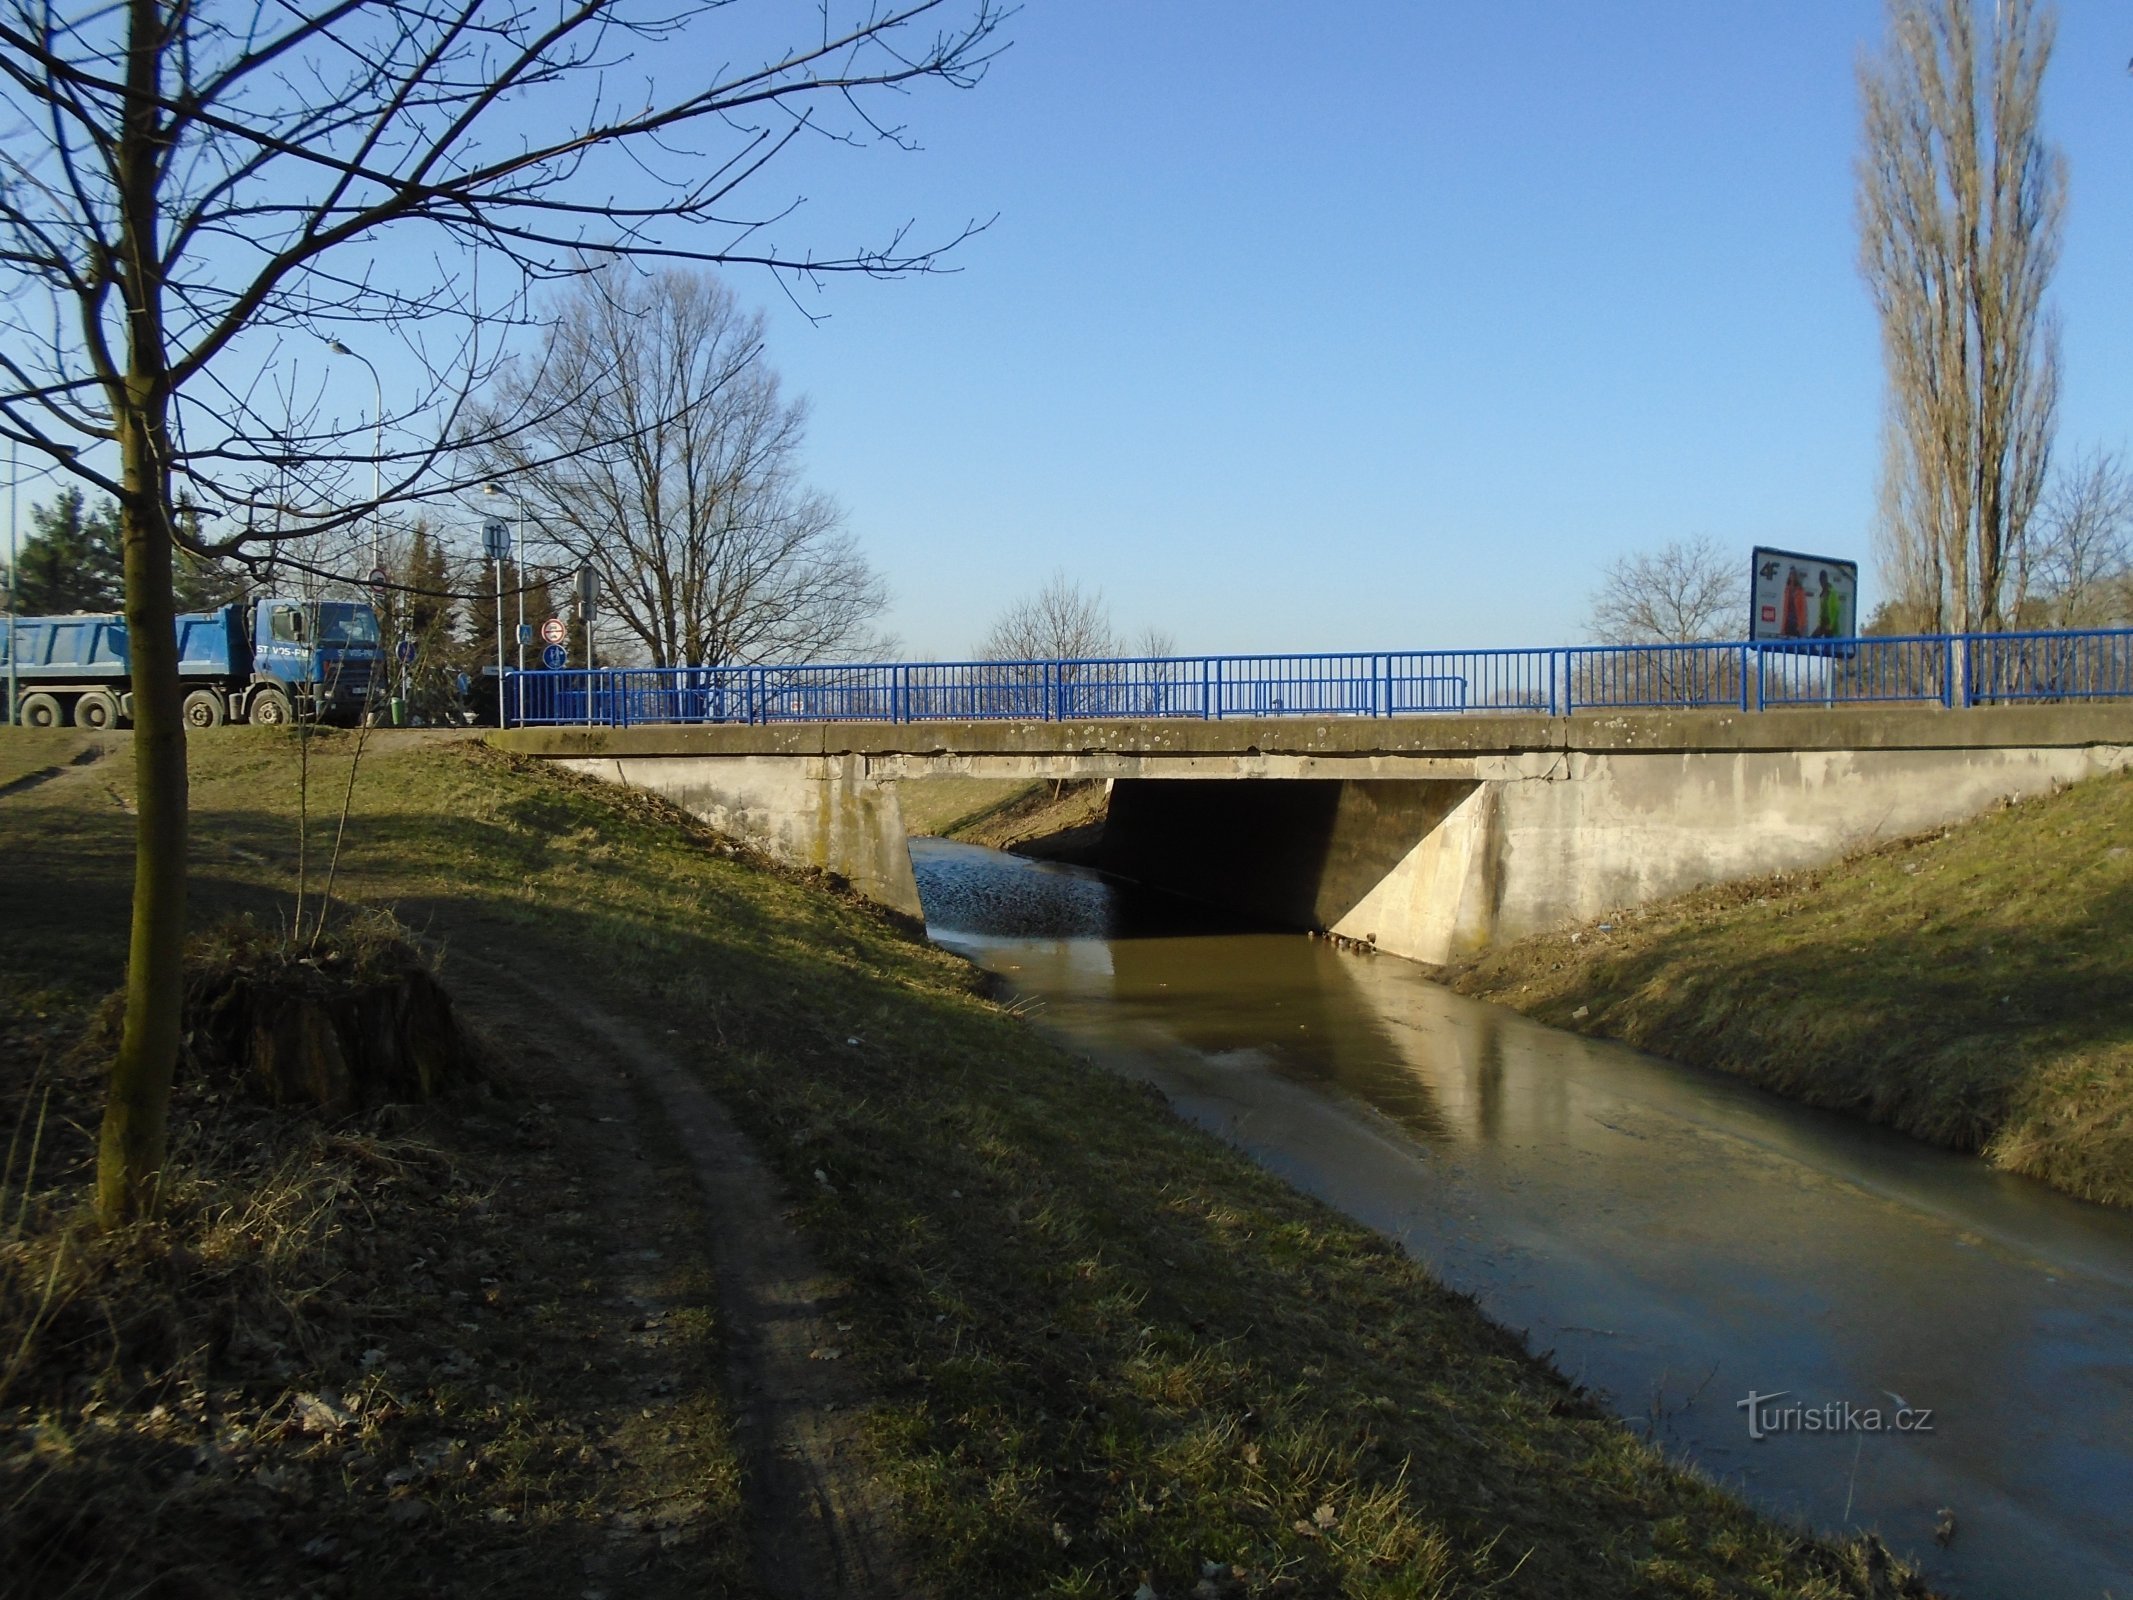 Cầu bắc qua suối Piletický giữa Silesian Suburb và Pouchov